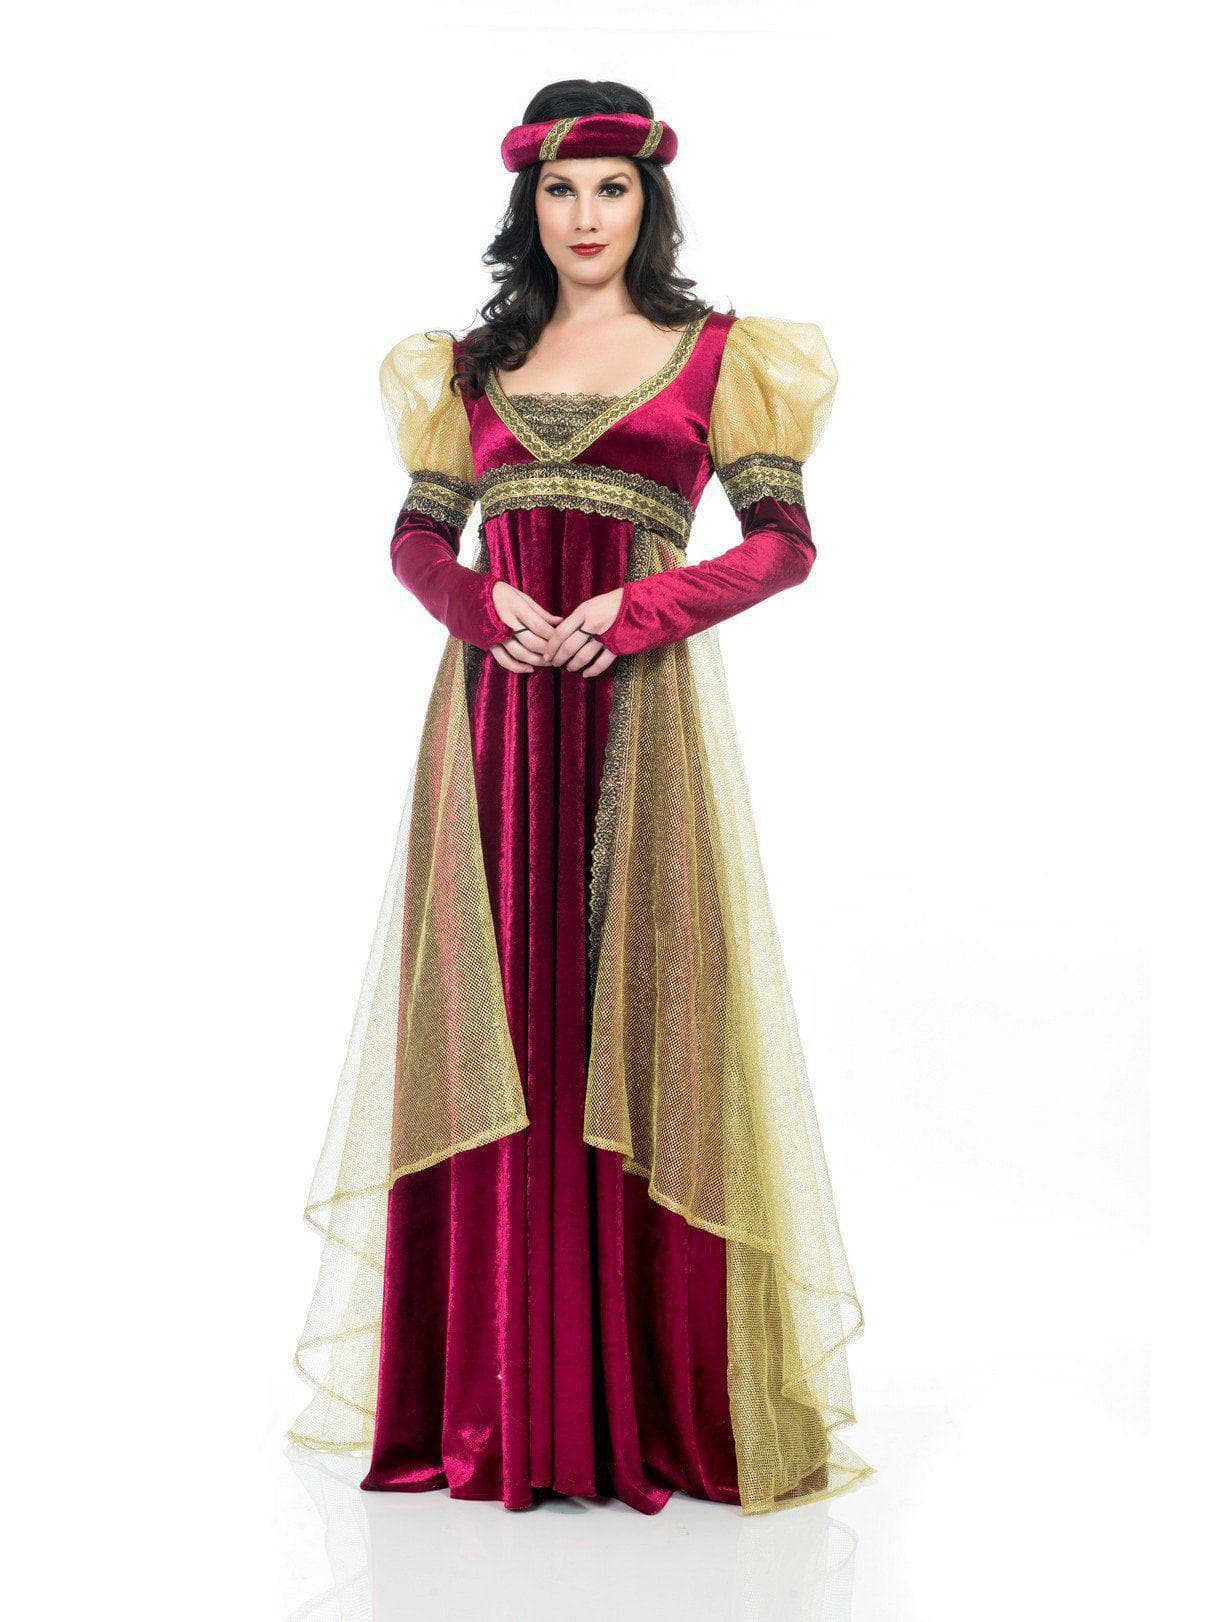 Adult Renaissance Lady Costume - costumes.com